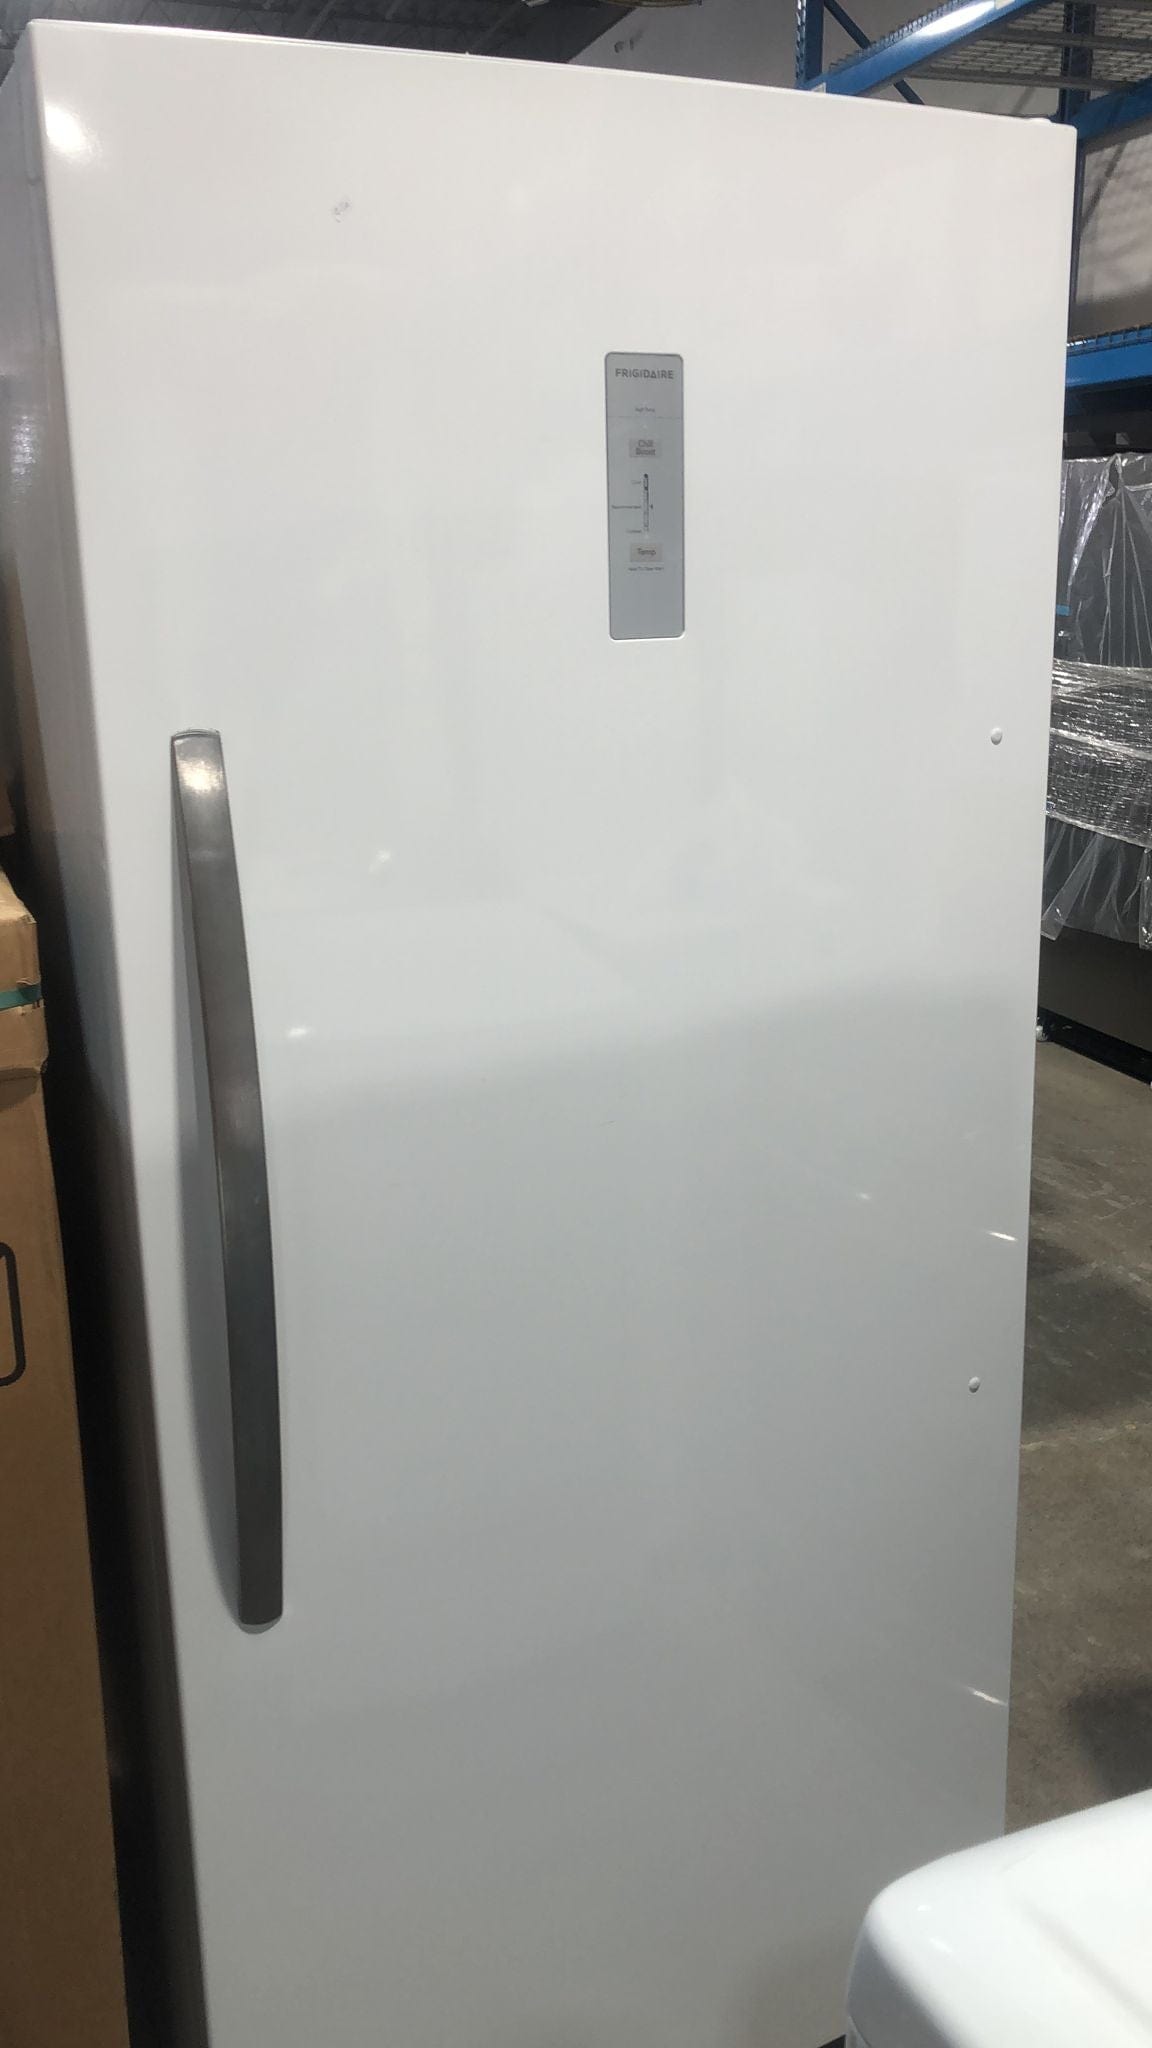 Frigidaire FRAE2024AW All Refrigerator, 33 inch Width, ENERGY STAR Certified, 19.6 cu. ft. Capacity, White colour